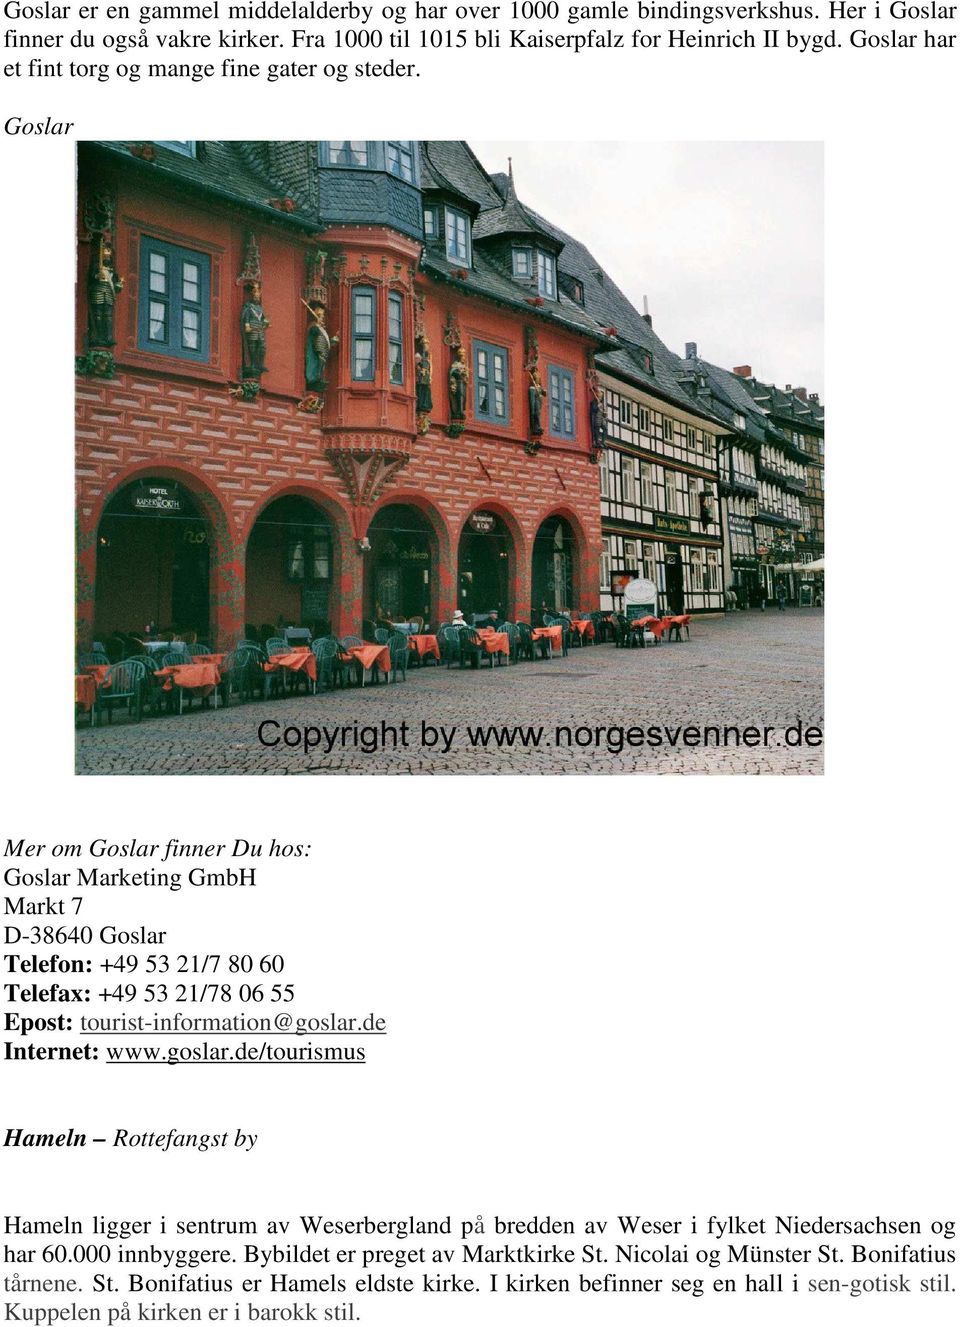 Goslar Mer om Goslar finner Du hos: Goslar Marketing GmbH Markt 7 D-38640 Goslar Telefon: +49 53 21/7 80 60 Telefax: +49 53 21/78 06 55 Epost: tourist-information@goslar.de Internet: www.